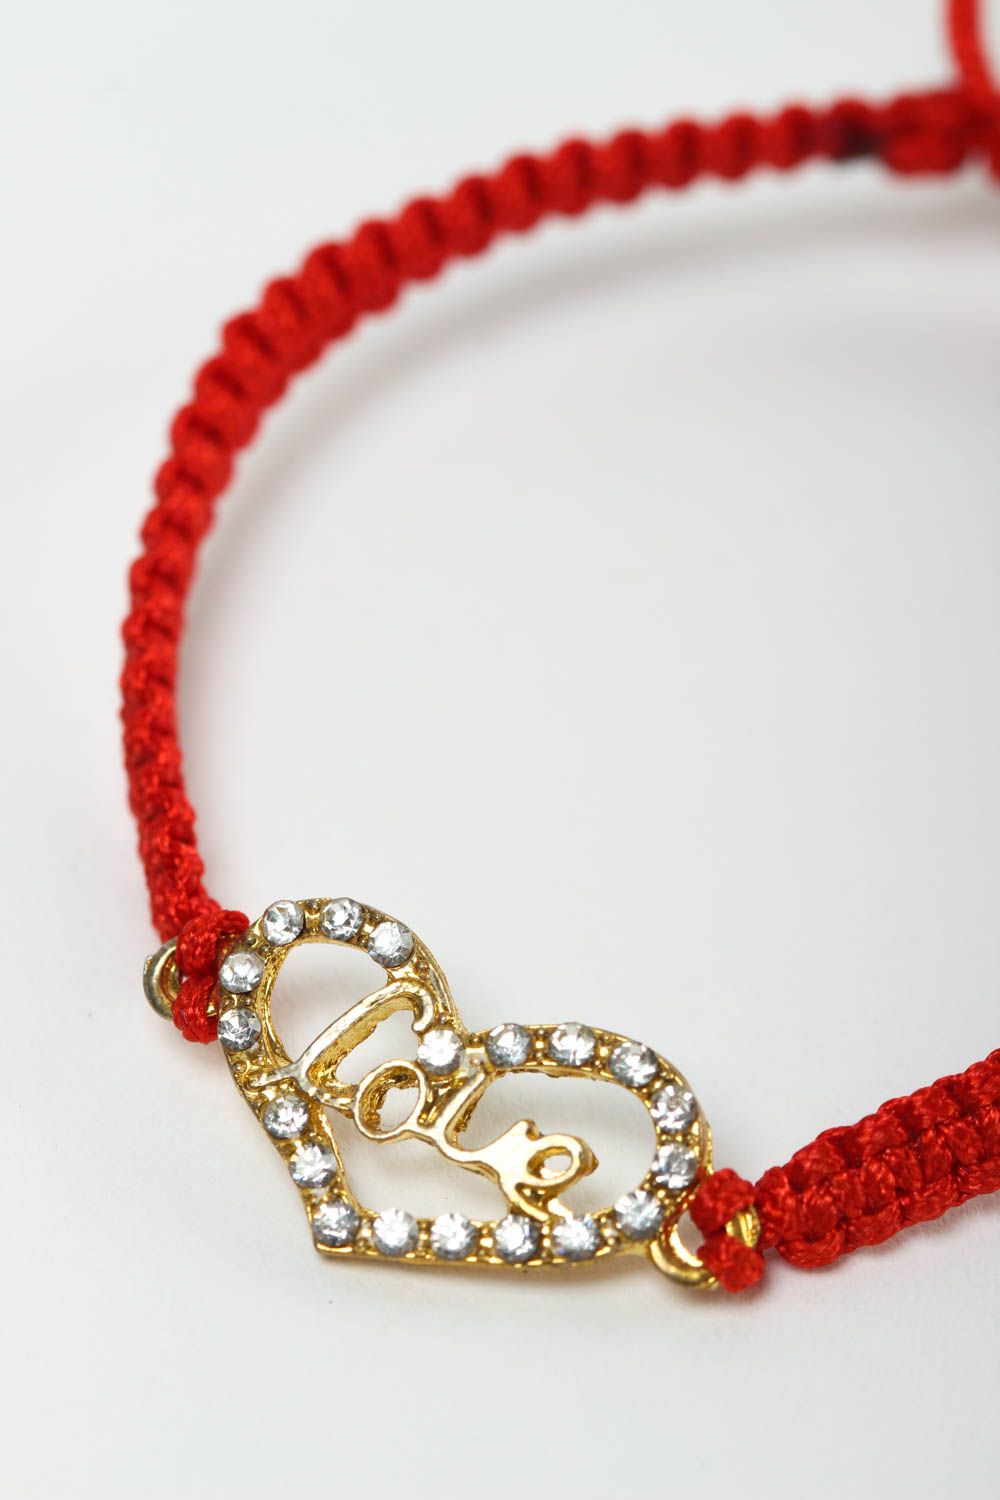 Stylish handmade woven thread bracelet friendship bracelet designs gifts for her photo 3